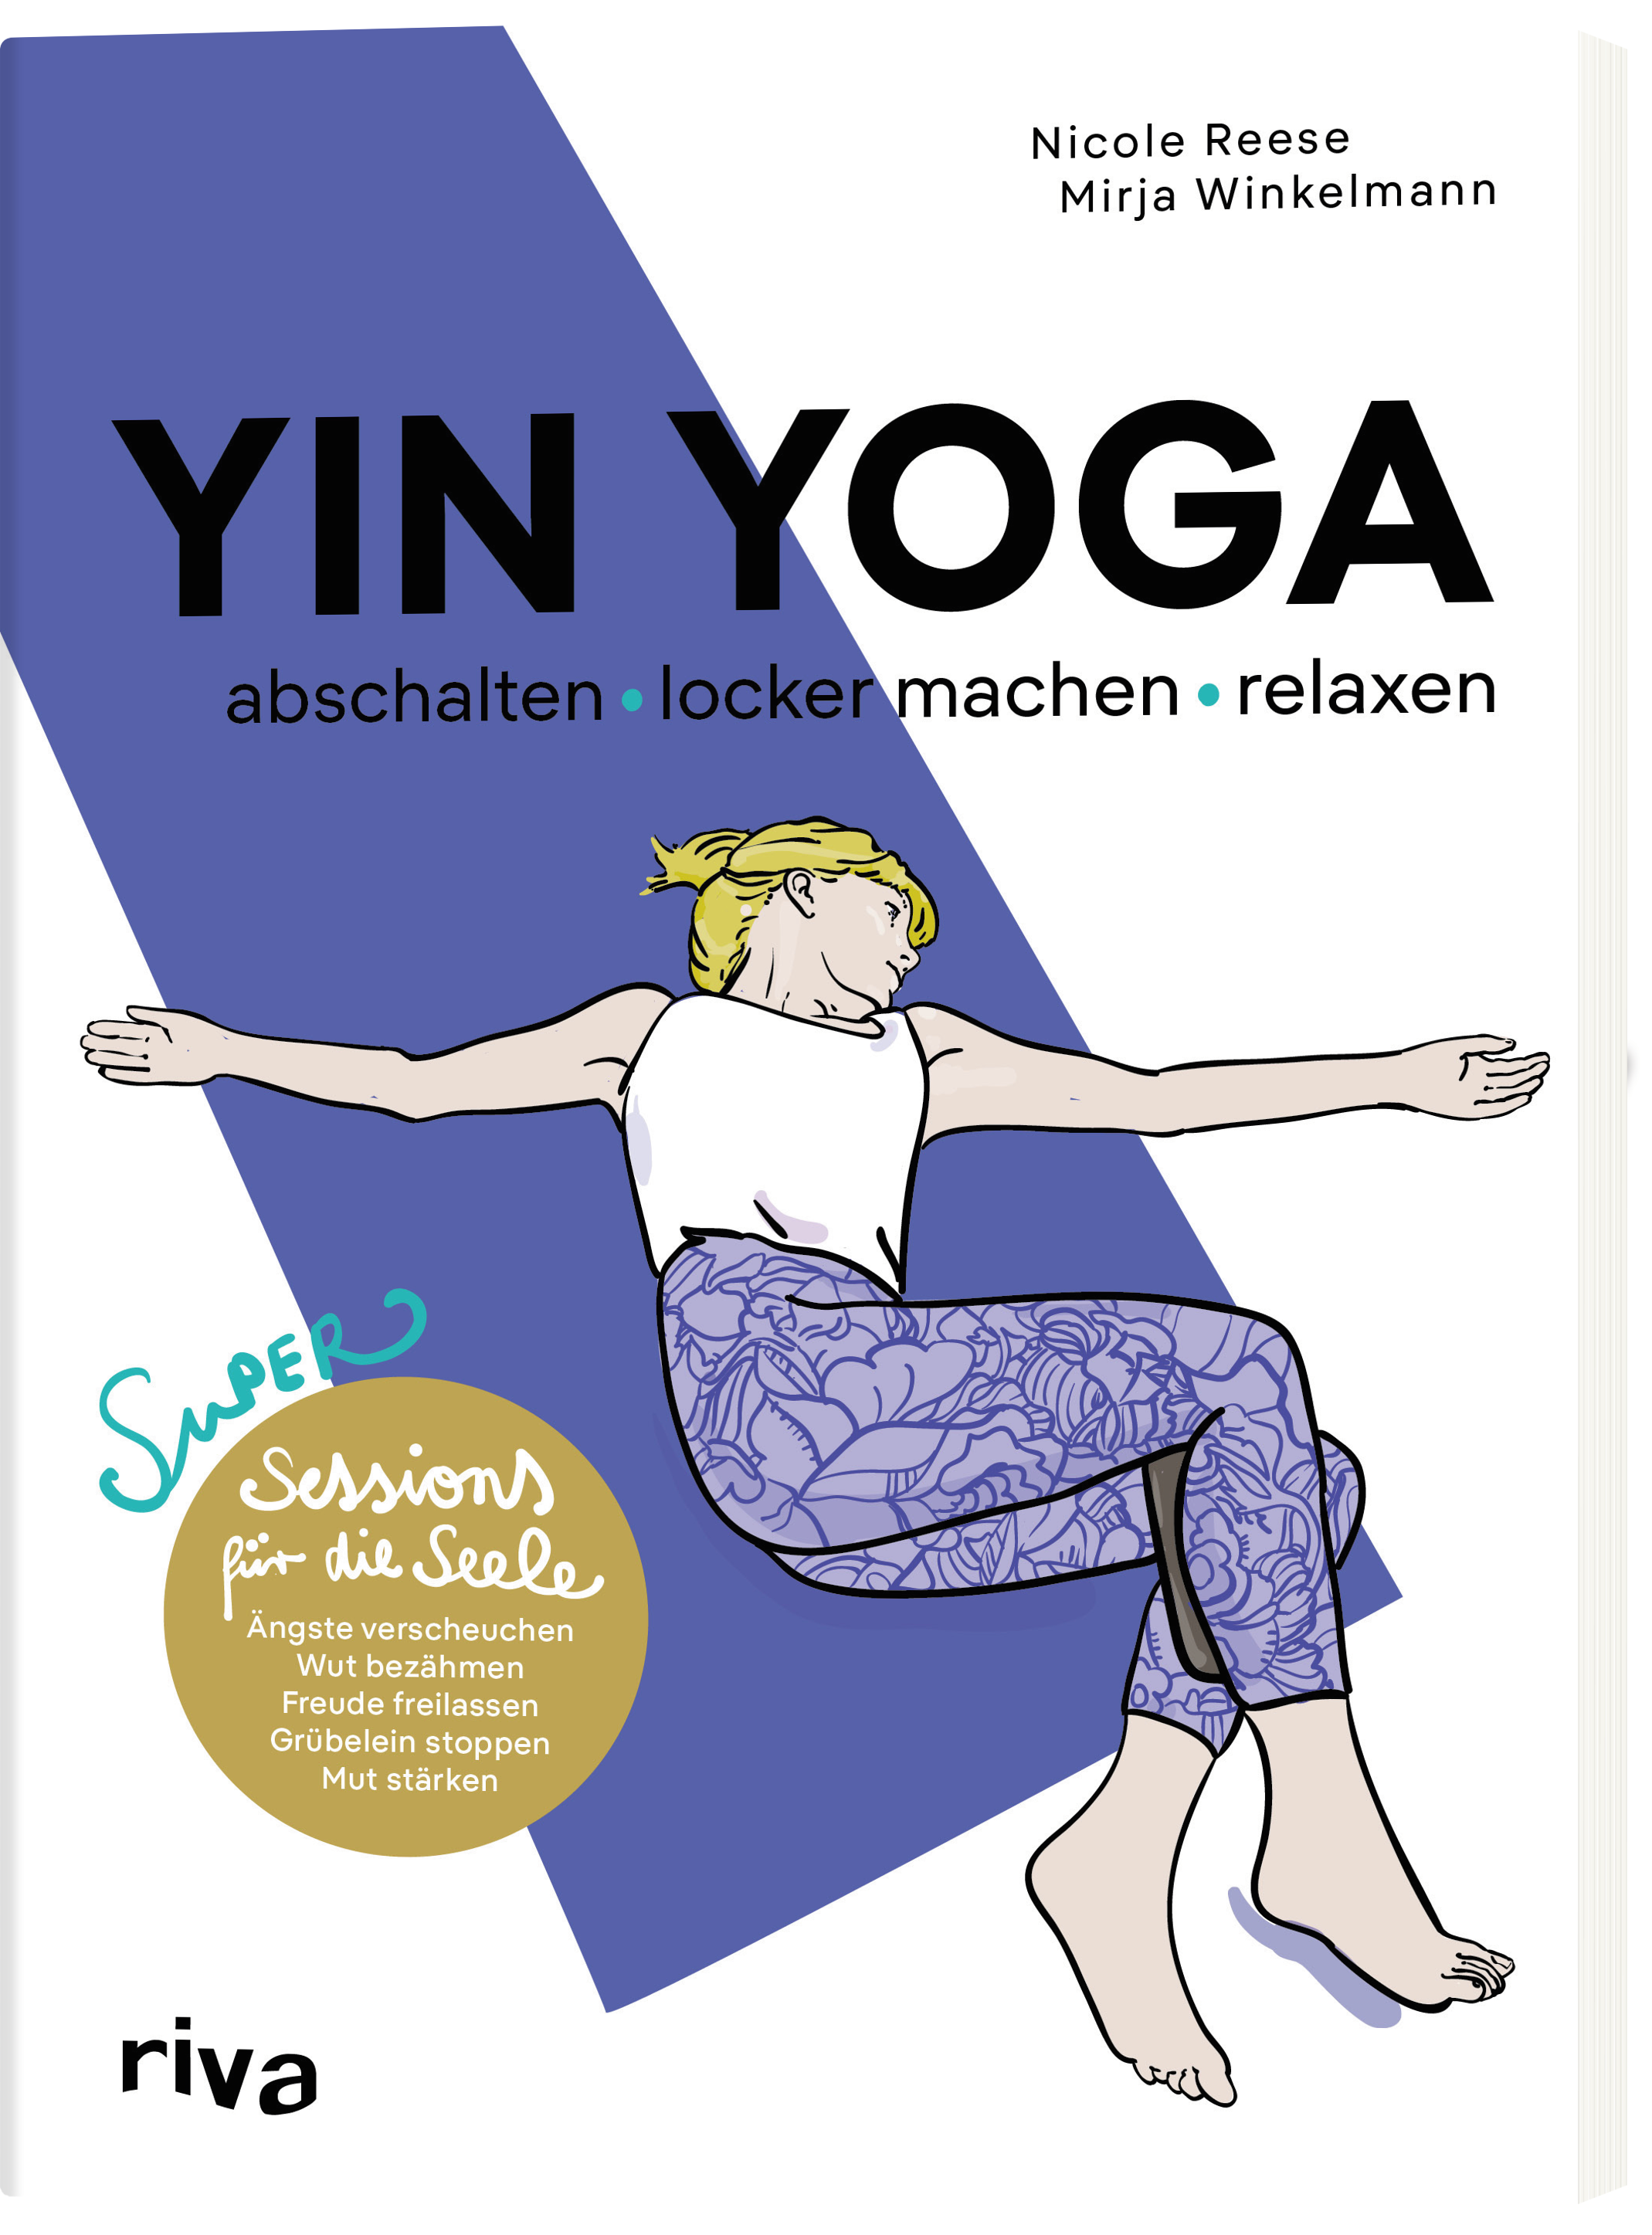 Symbole aus dem Yoga - Das Yoga-Magazin von Yoga Escapes